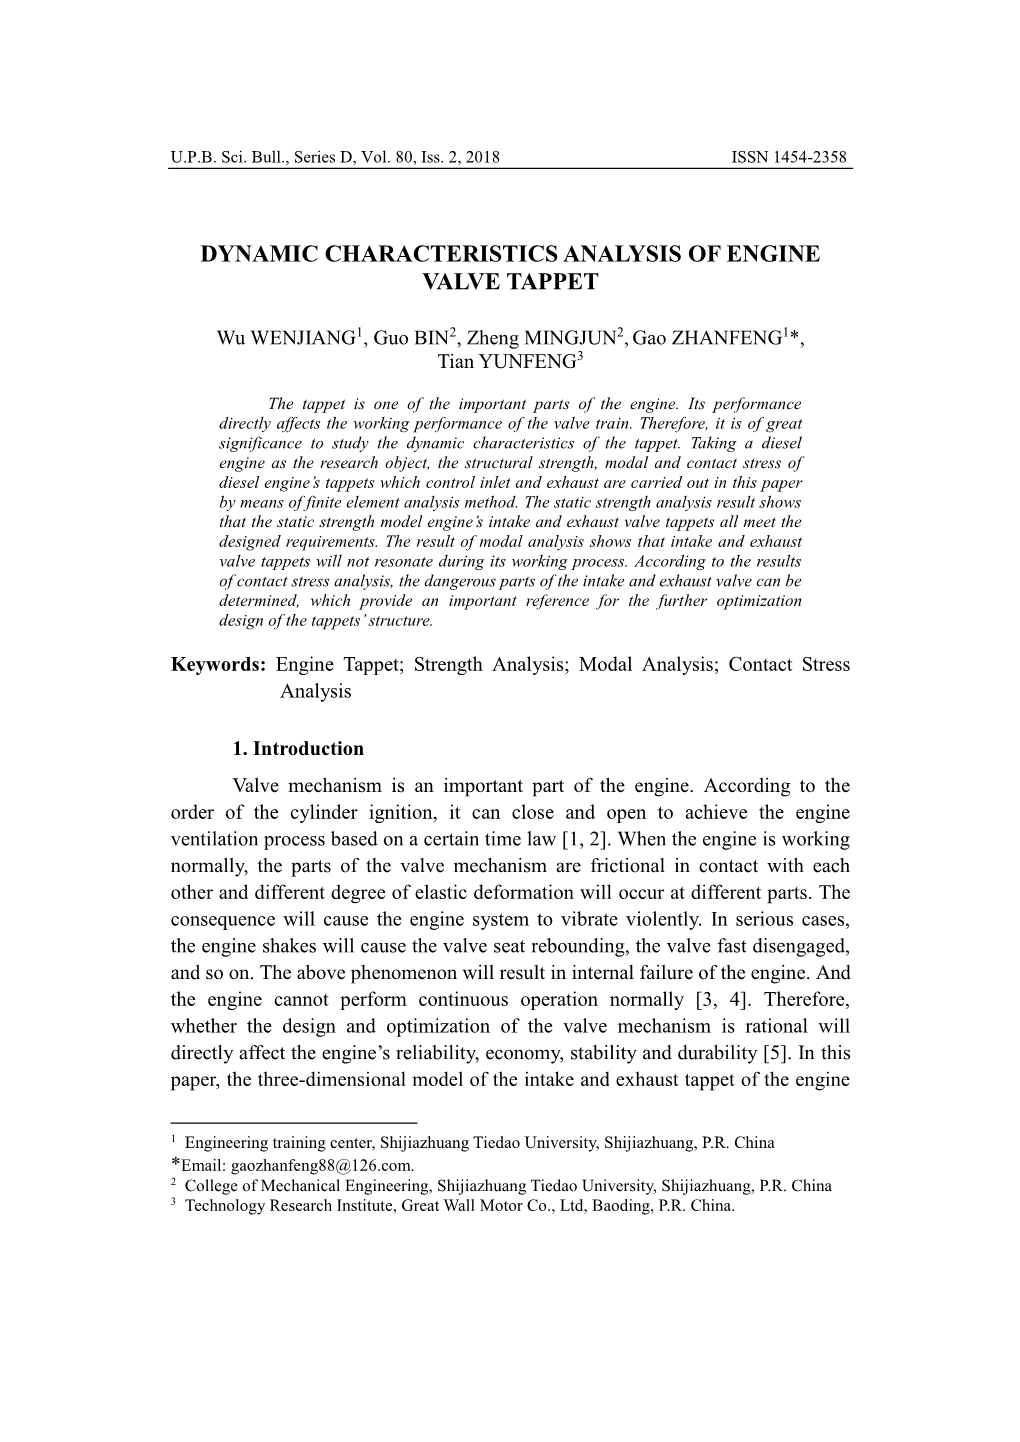 Dynamic Characteristics Analysis of Engine Valve Tappet